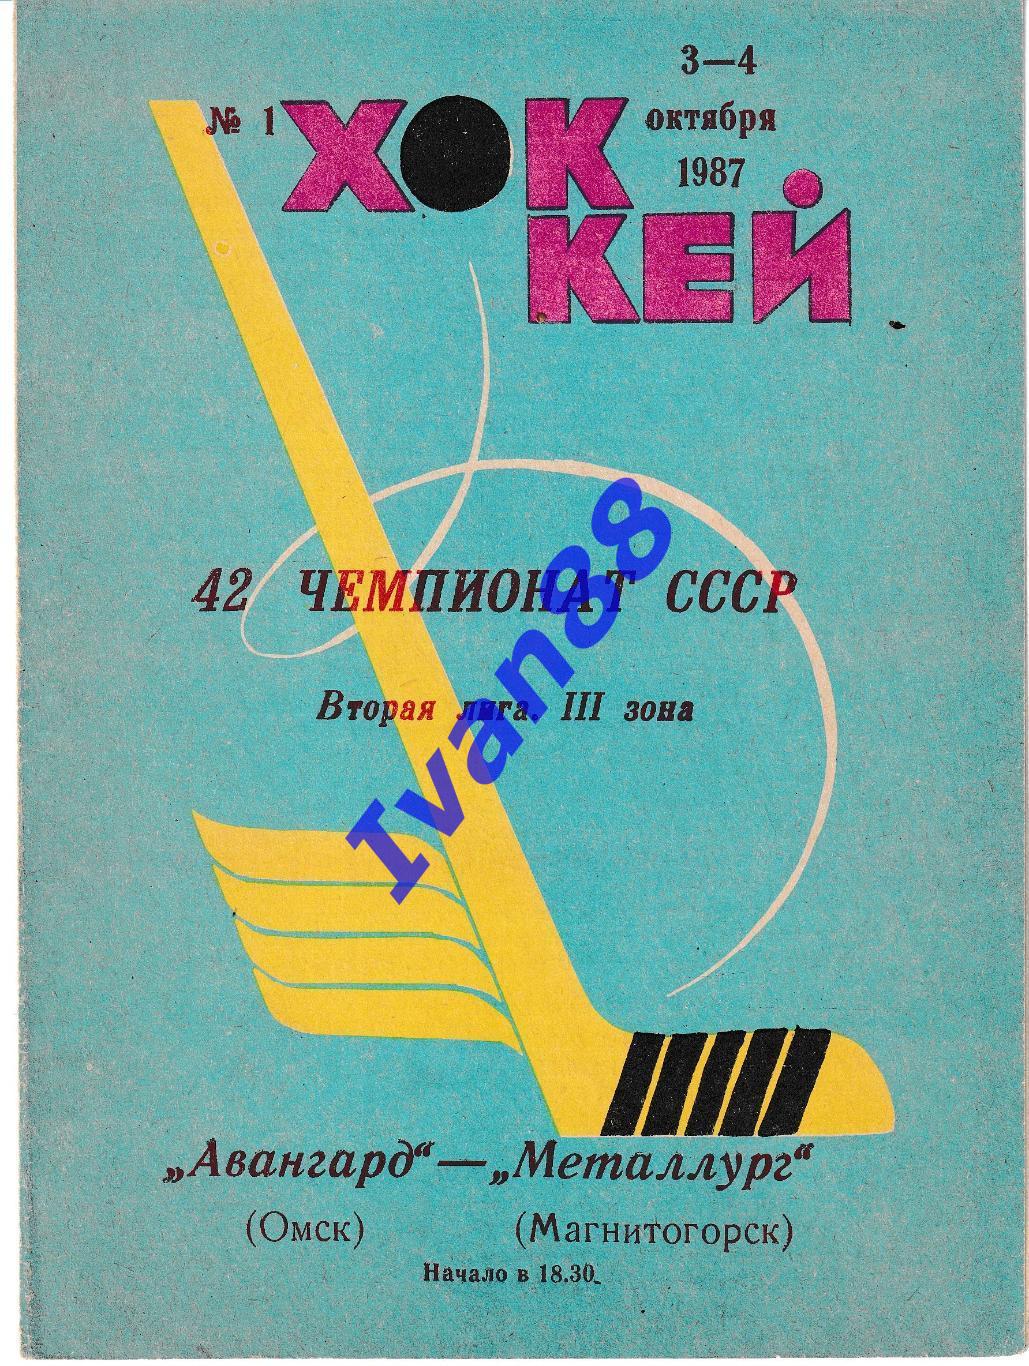 Авангард Омск - Металлург Магнитогорск 3-4 октября 1987